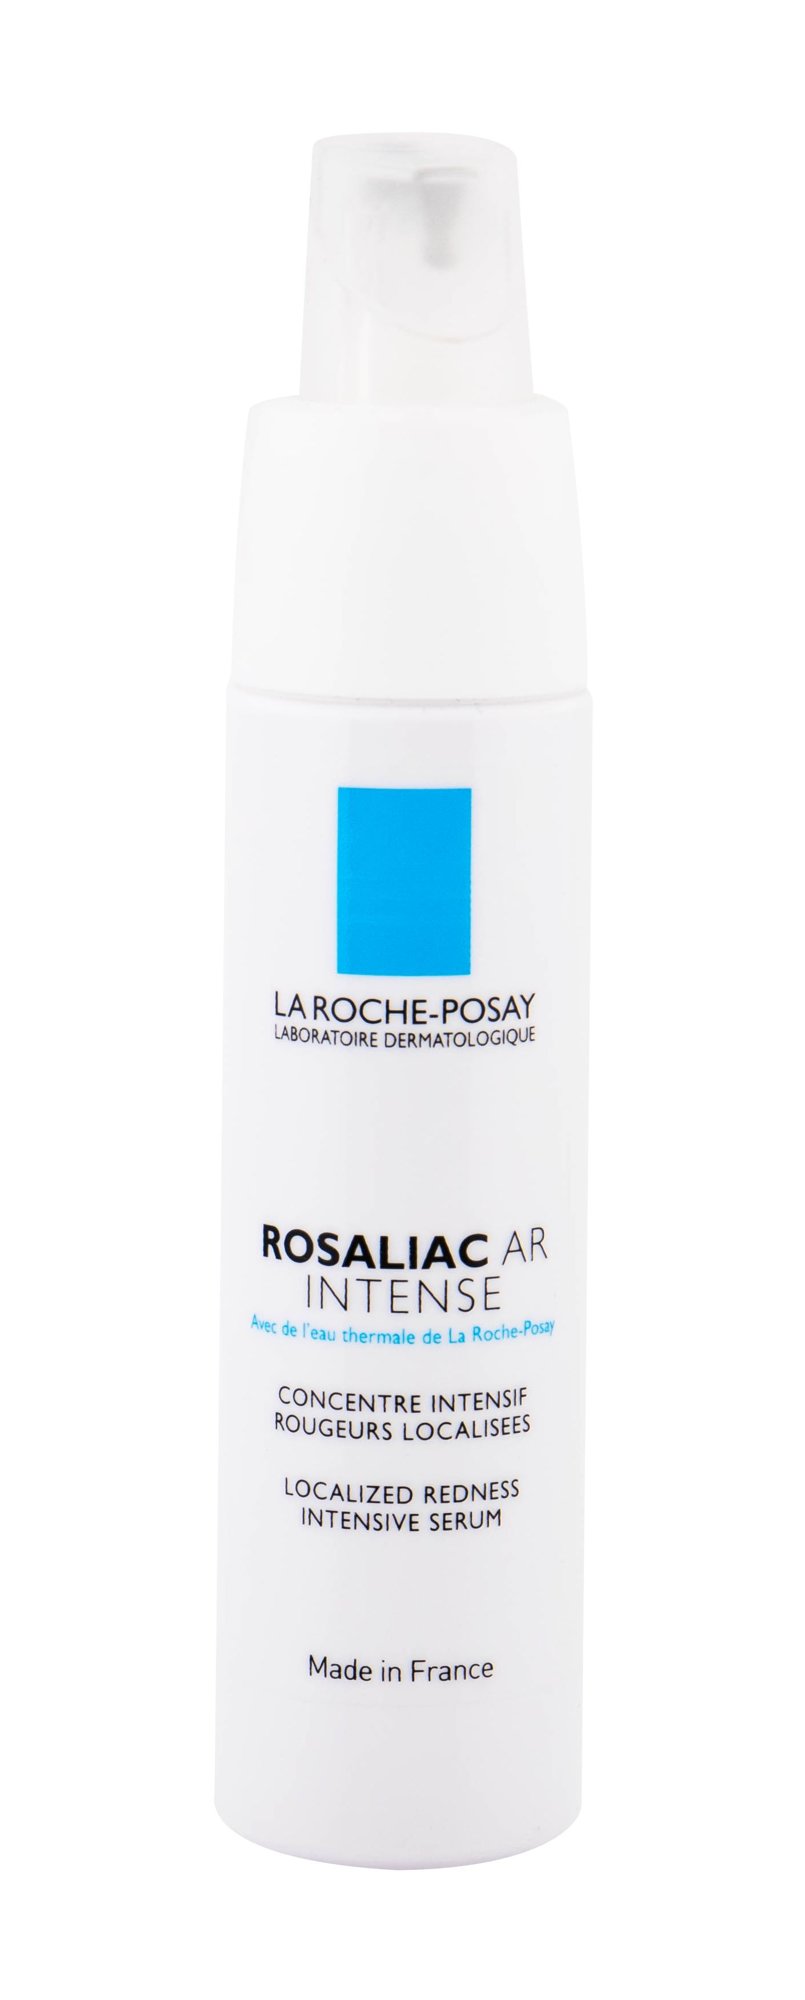 La Roche-Posay Rosaliac AR Intense veido gelis